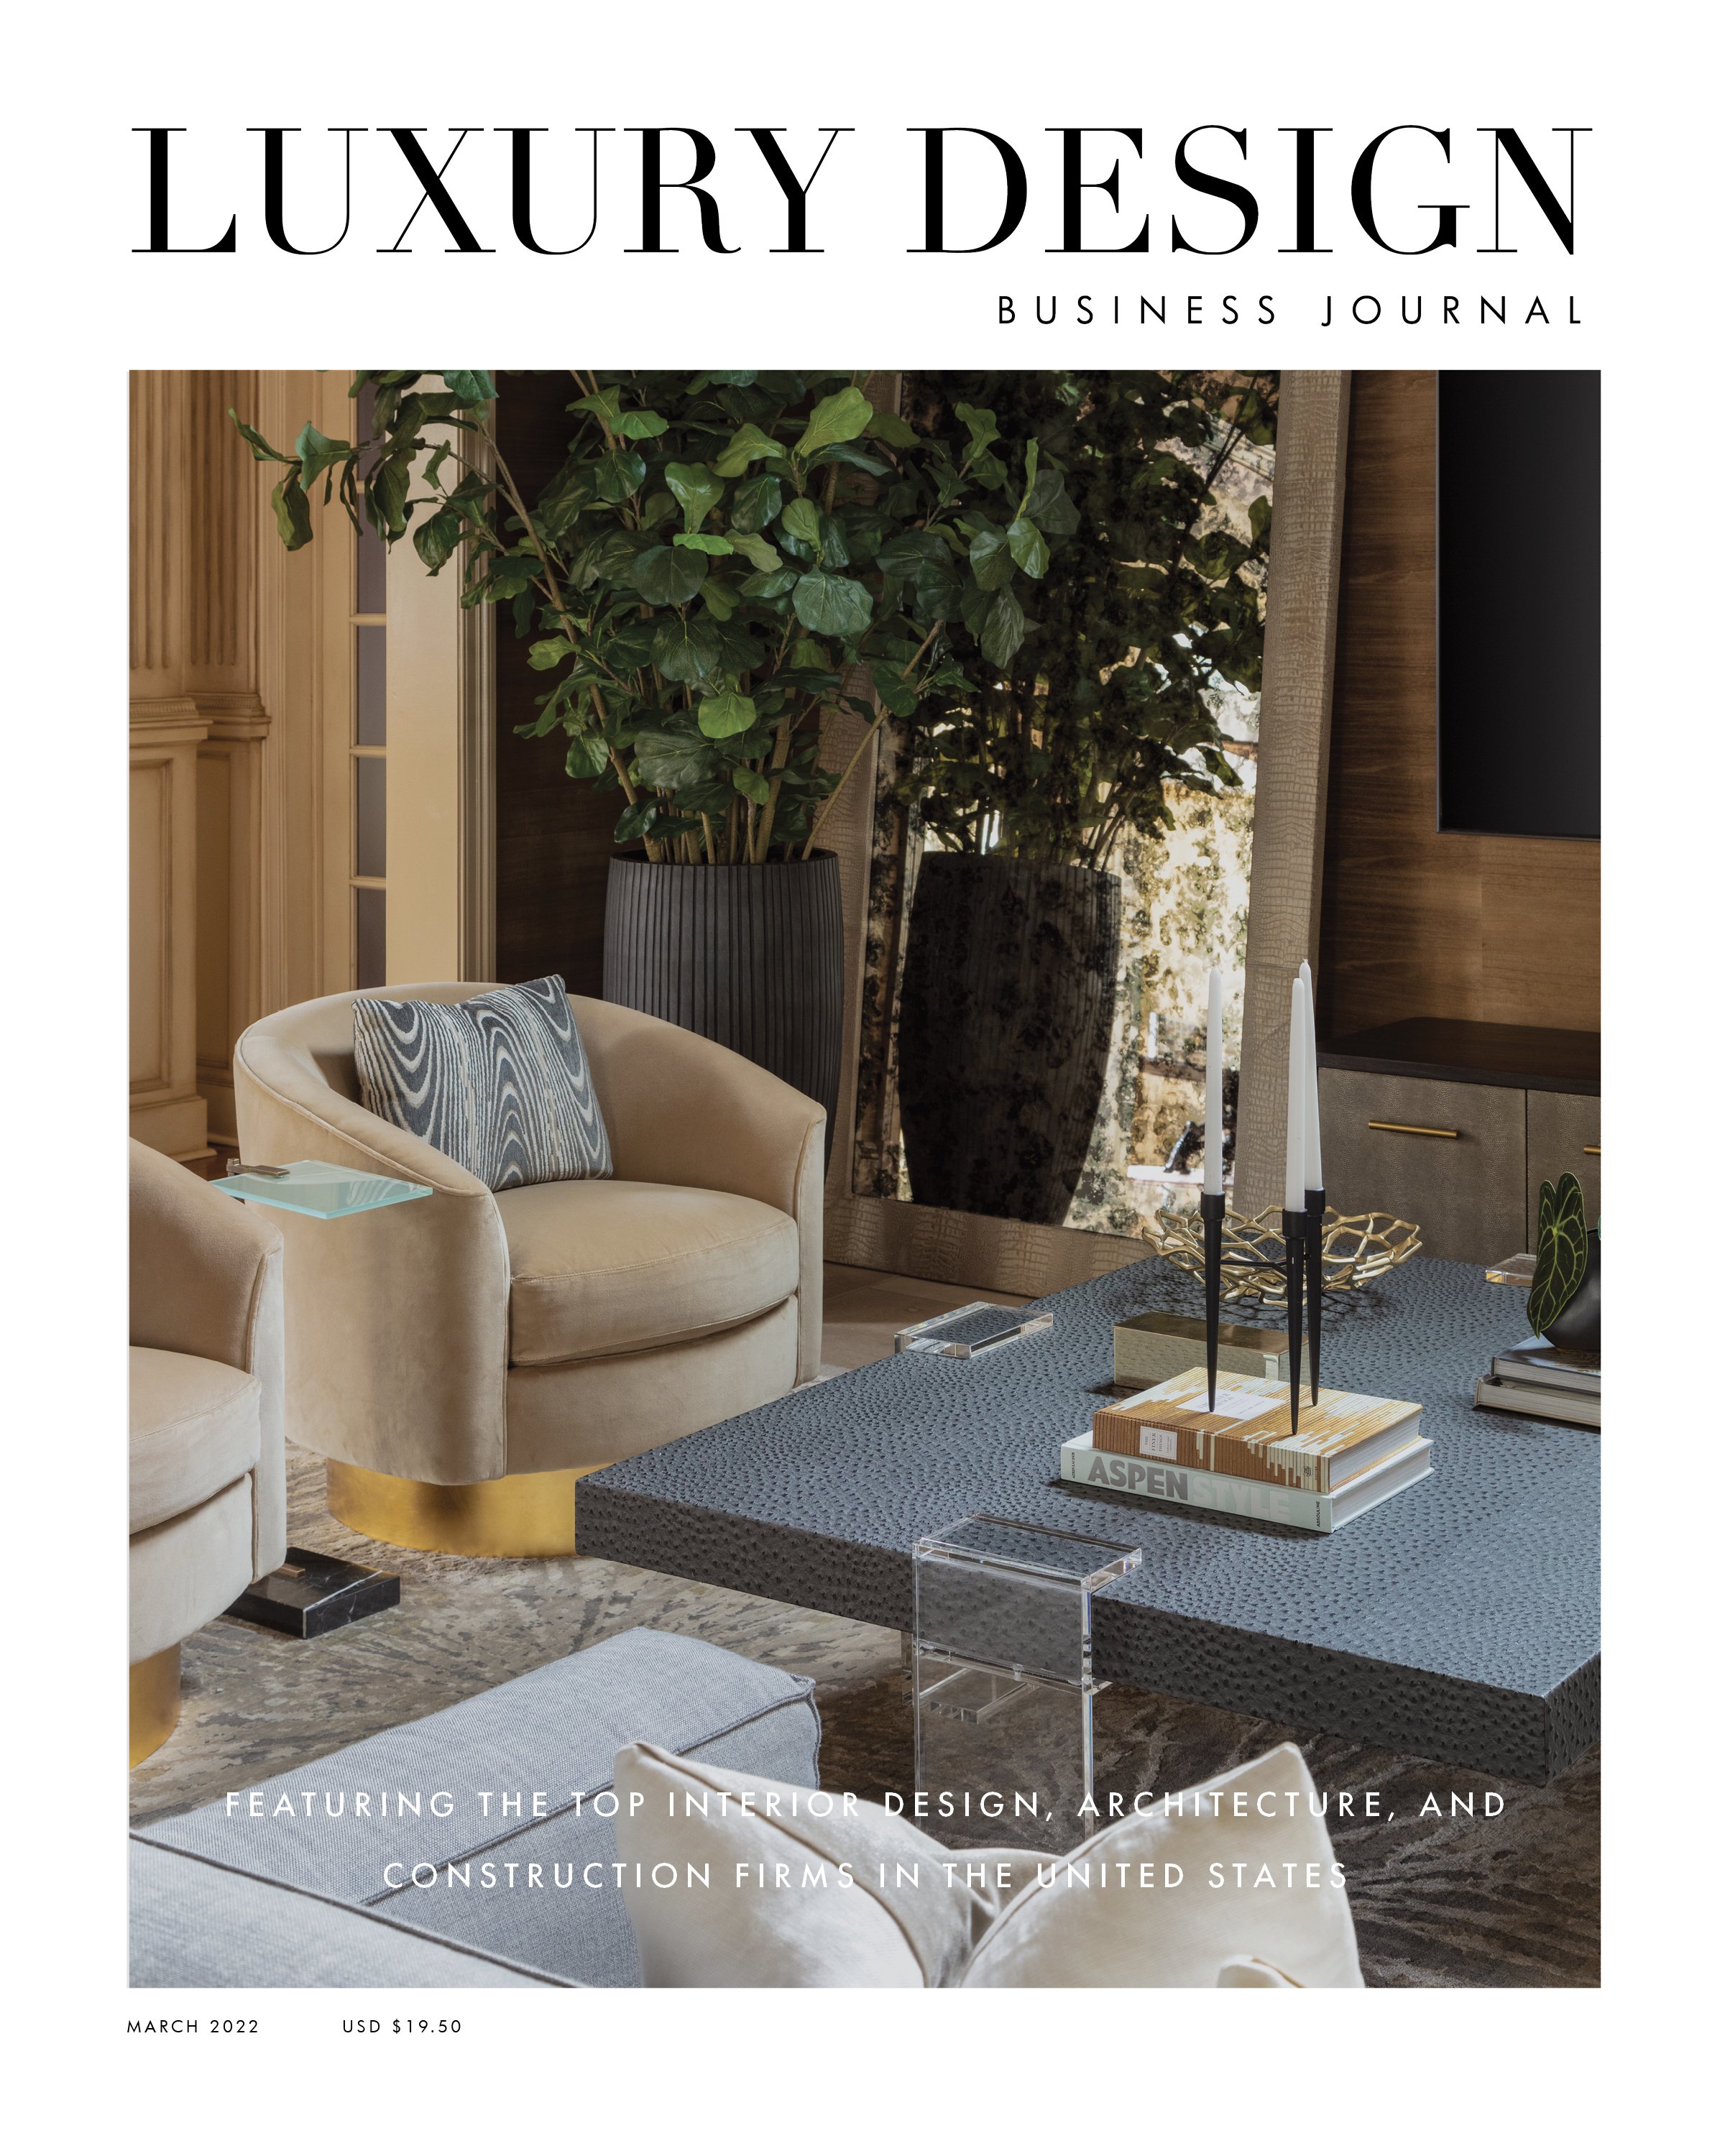 Luxury Design Business Journal